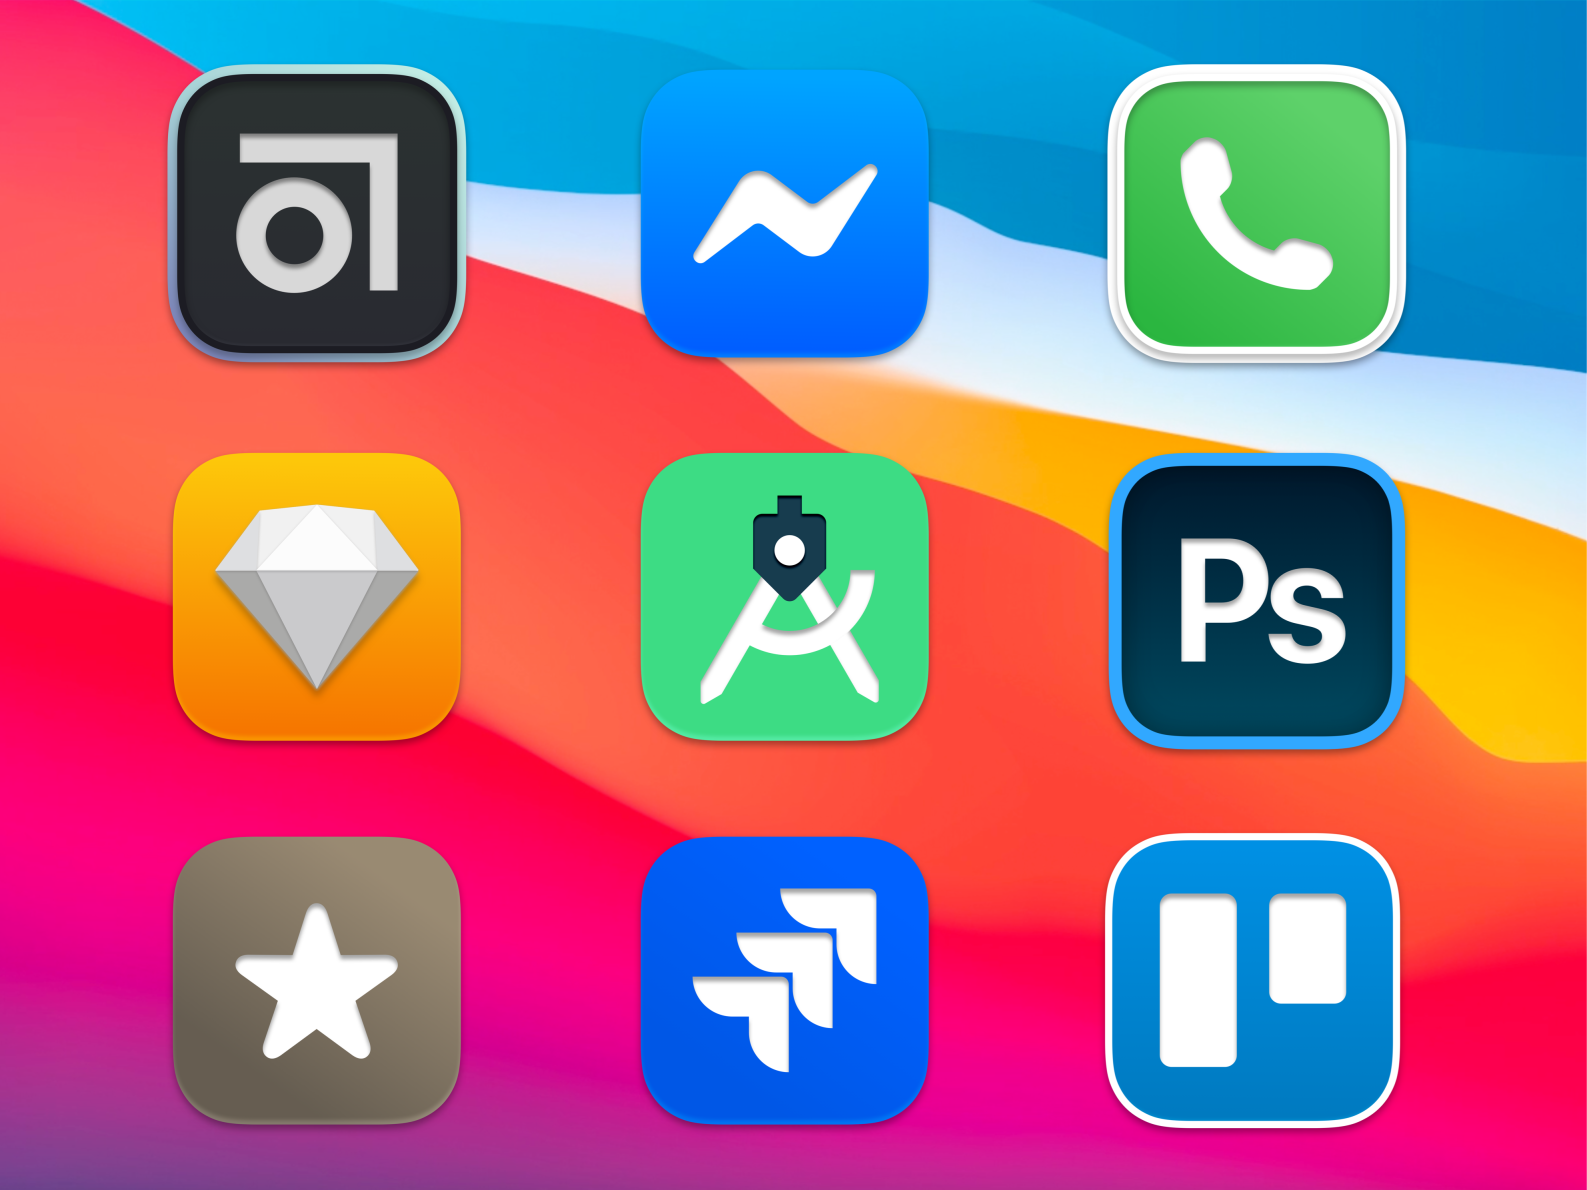 macOS Big Sur Icons by Dev-id on Dribbble